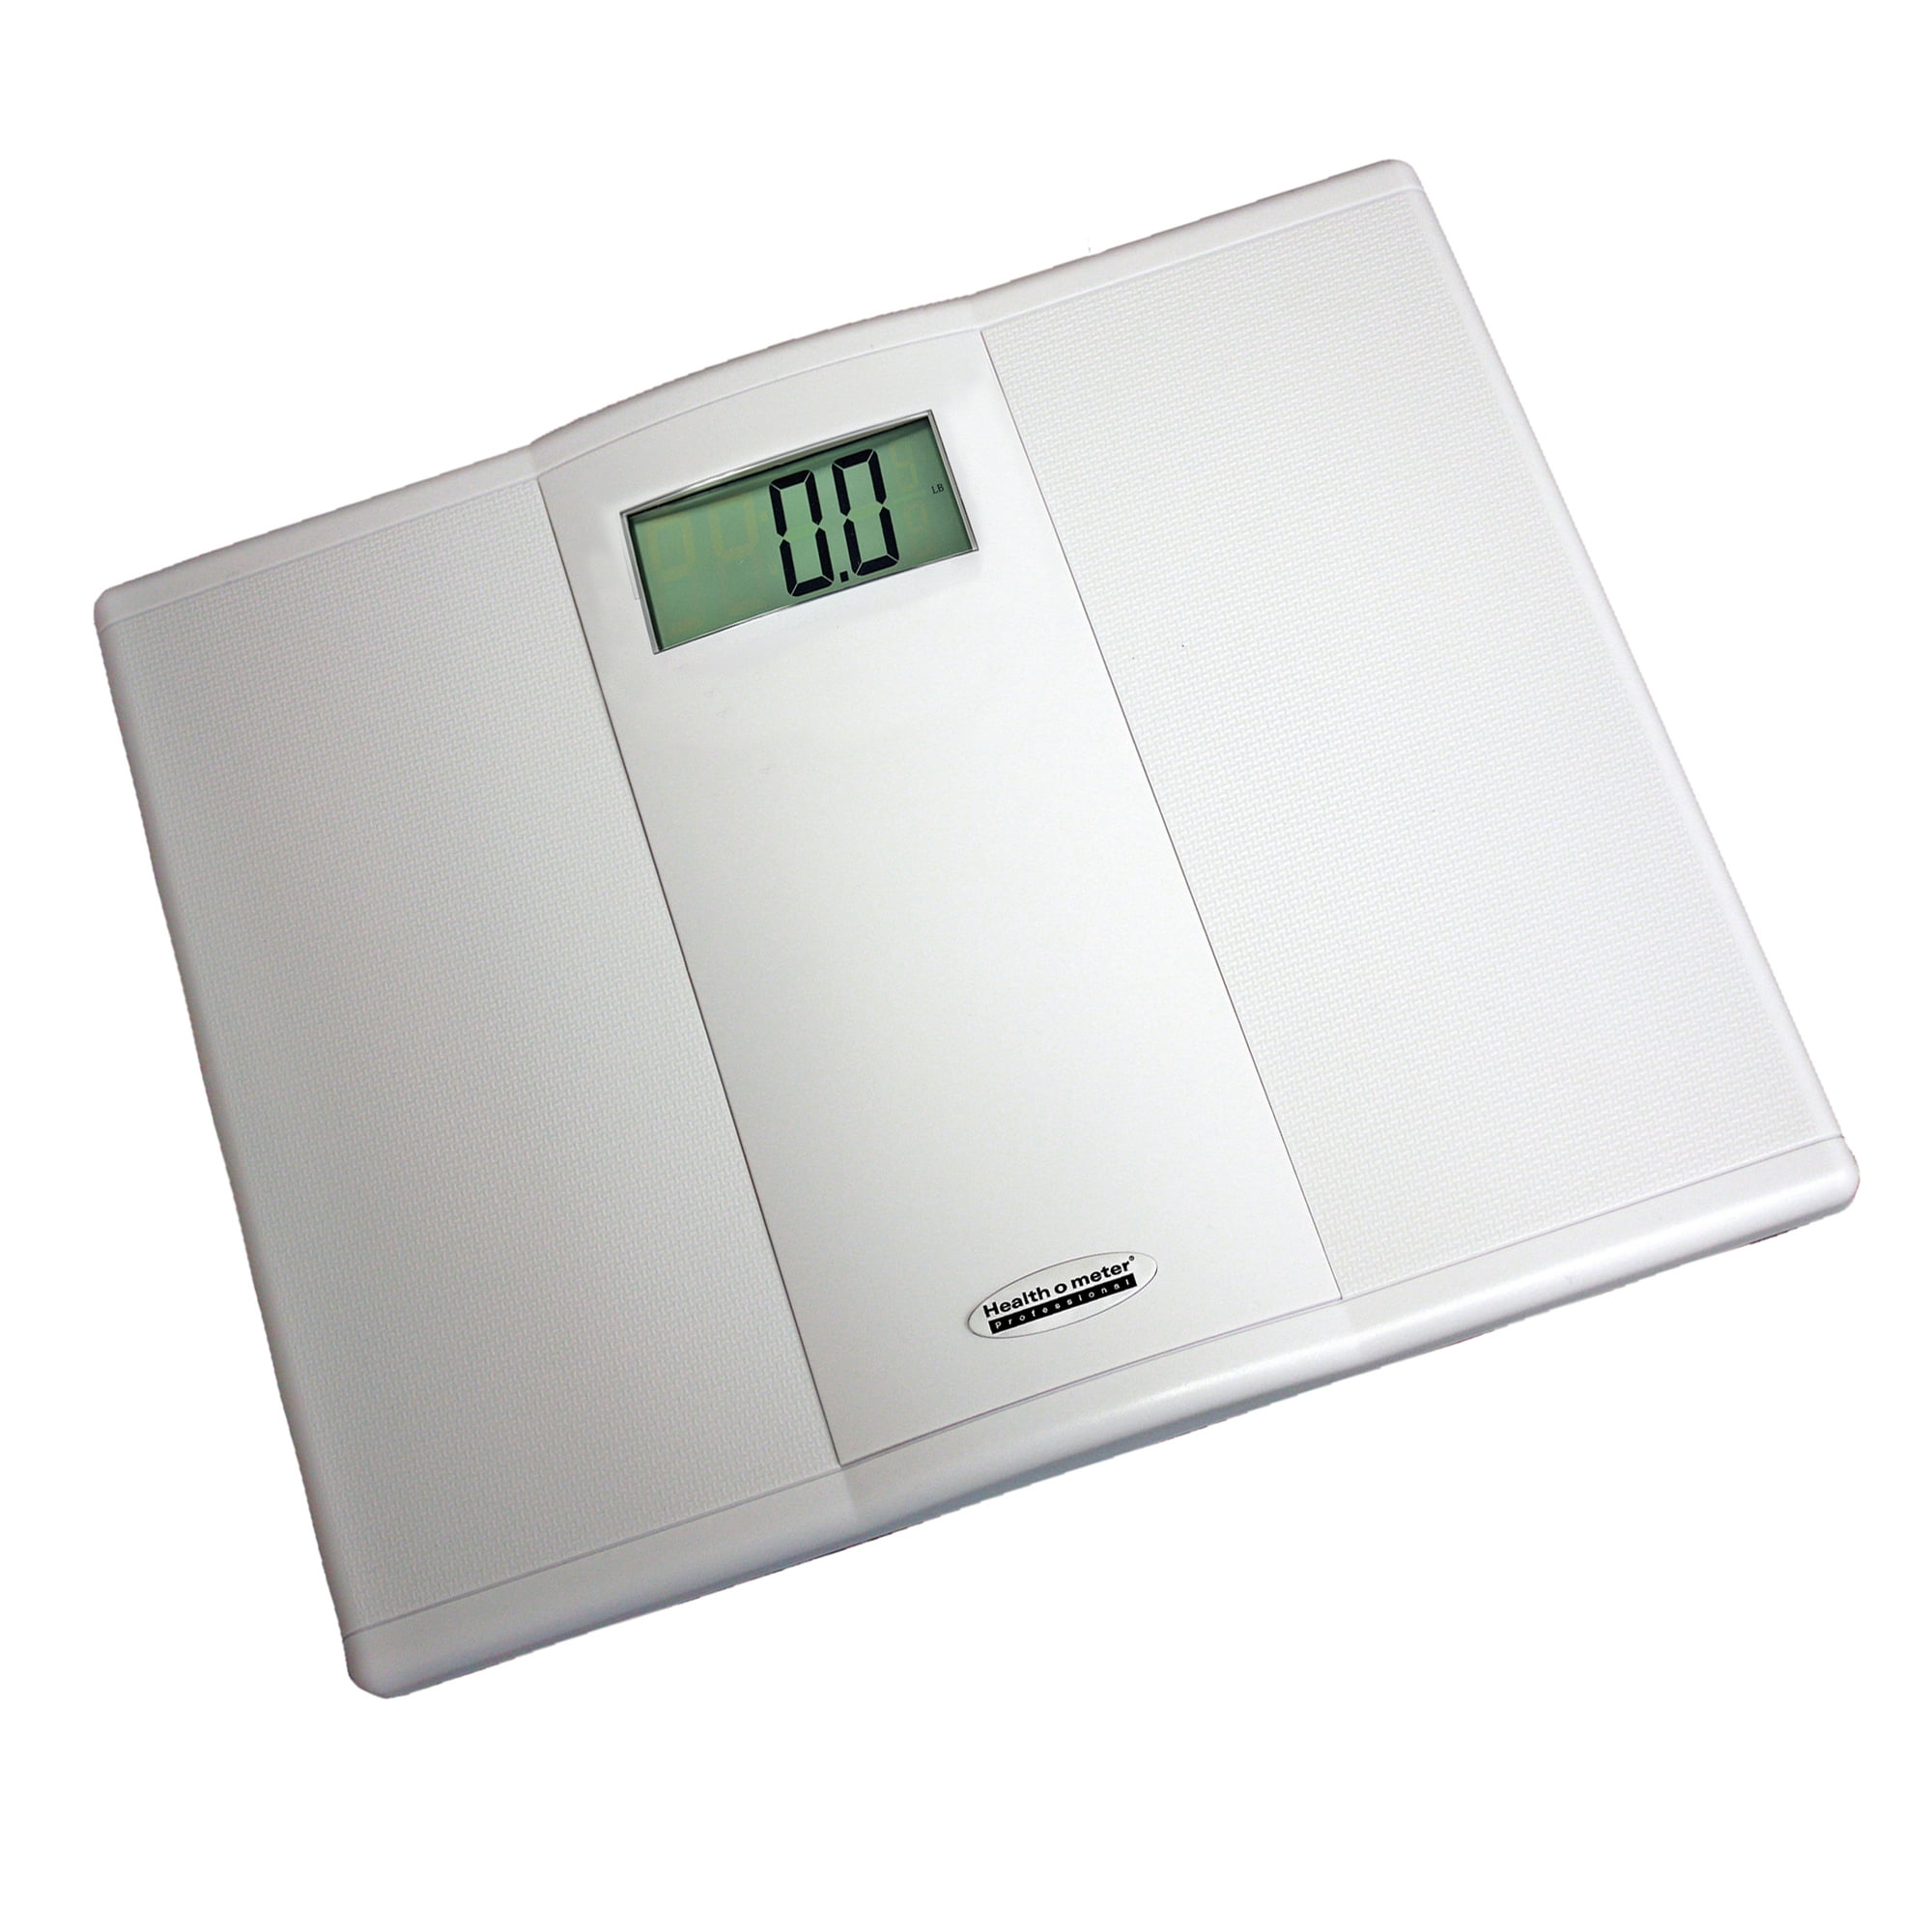  Health o Meter, HHM498KL, Professional Remote Digital Scale, 1,  Black,Gray : Industrial & Scientific